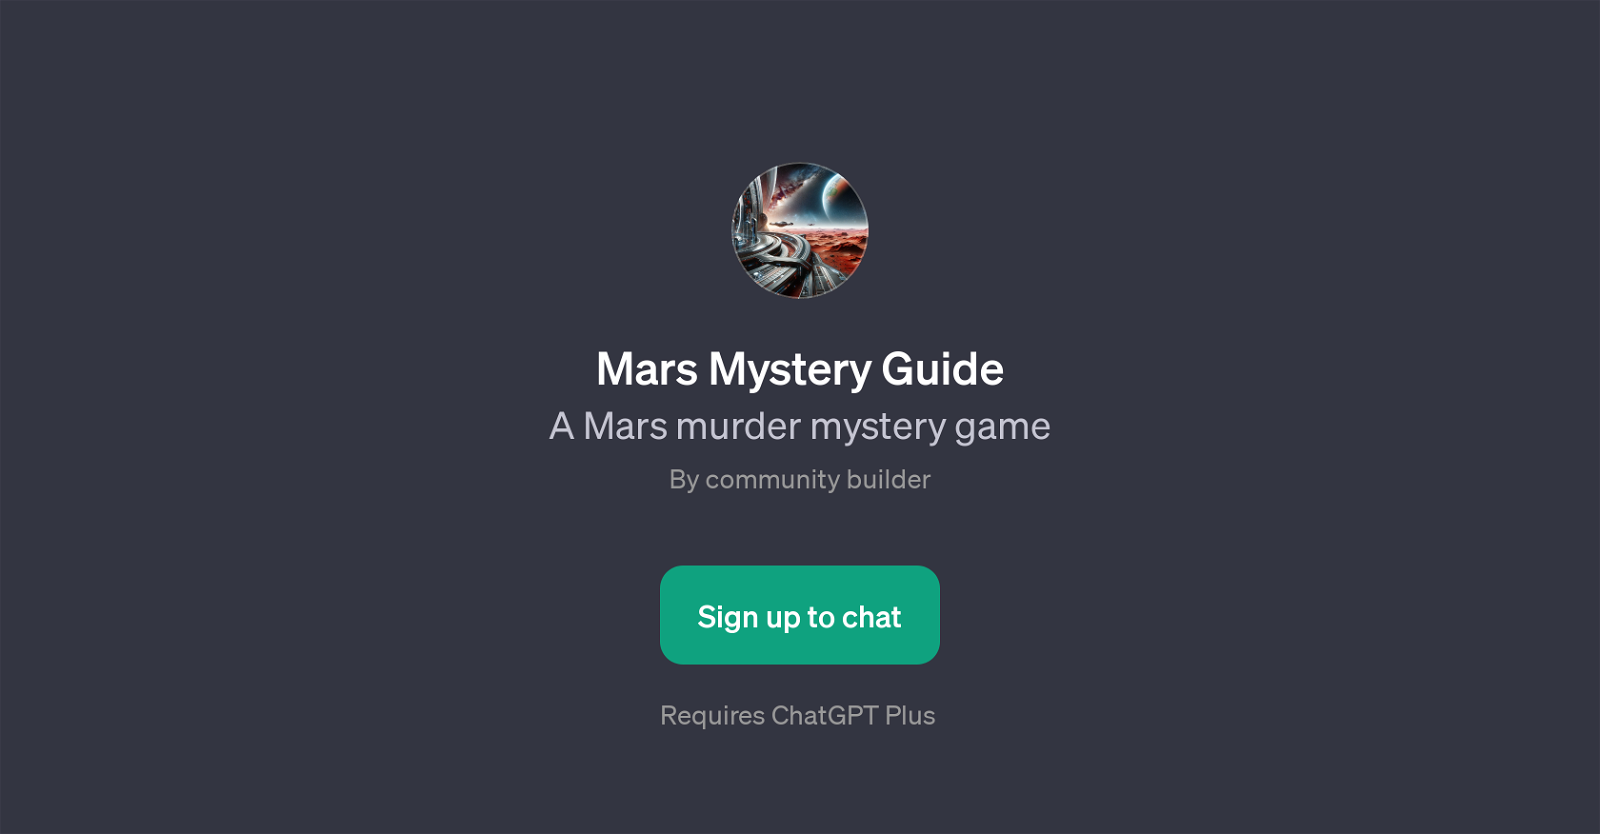 Mars Mystery Guide website